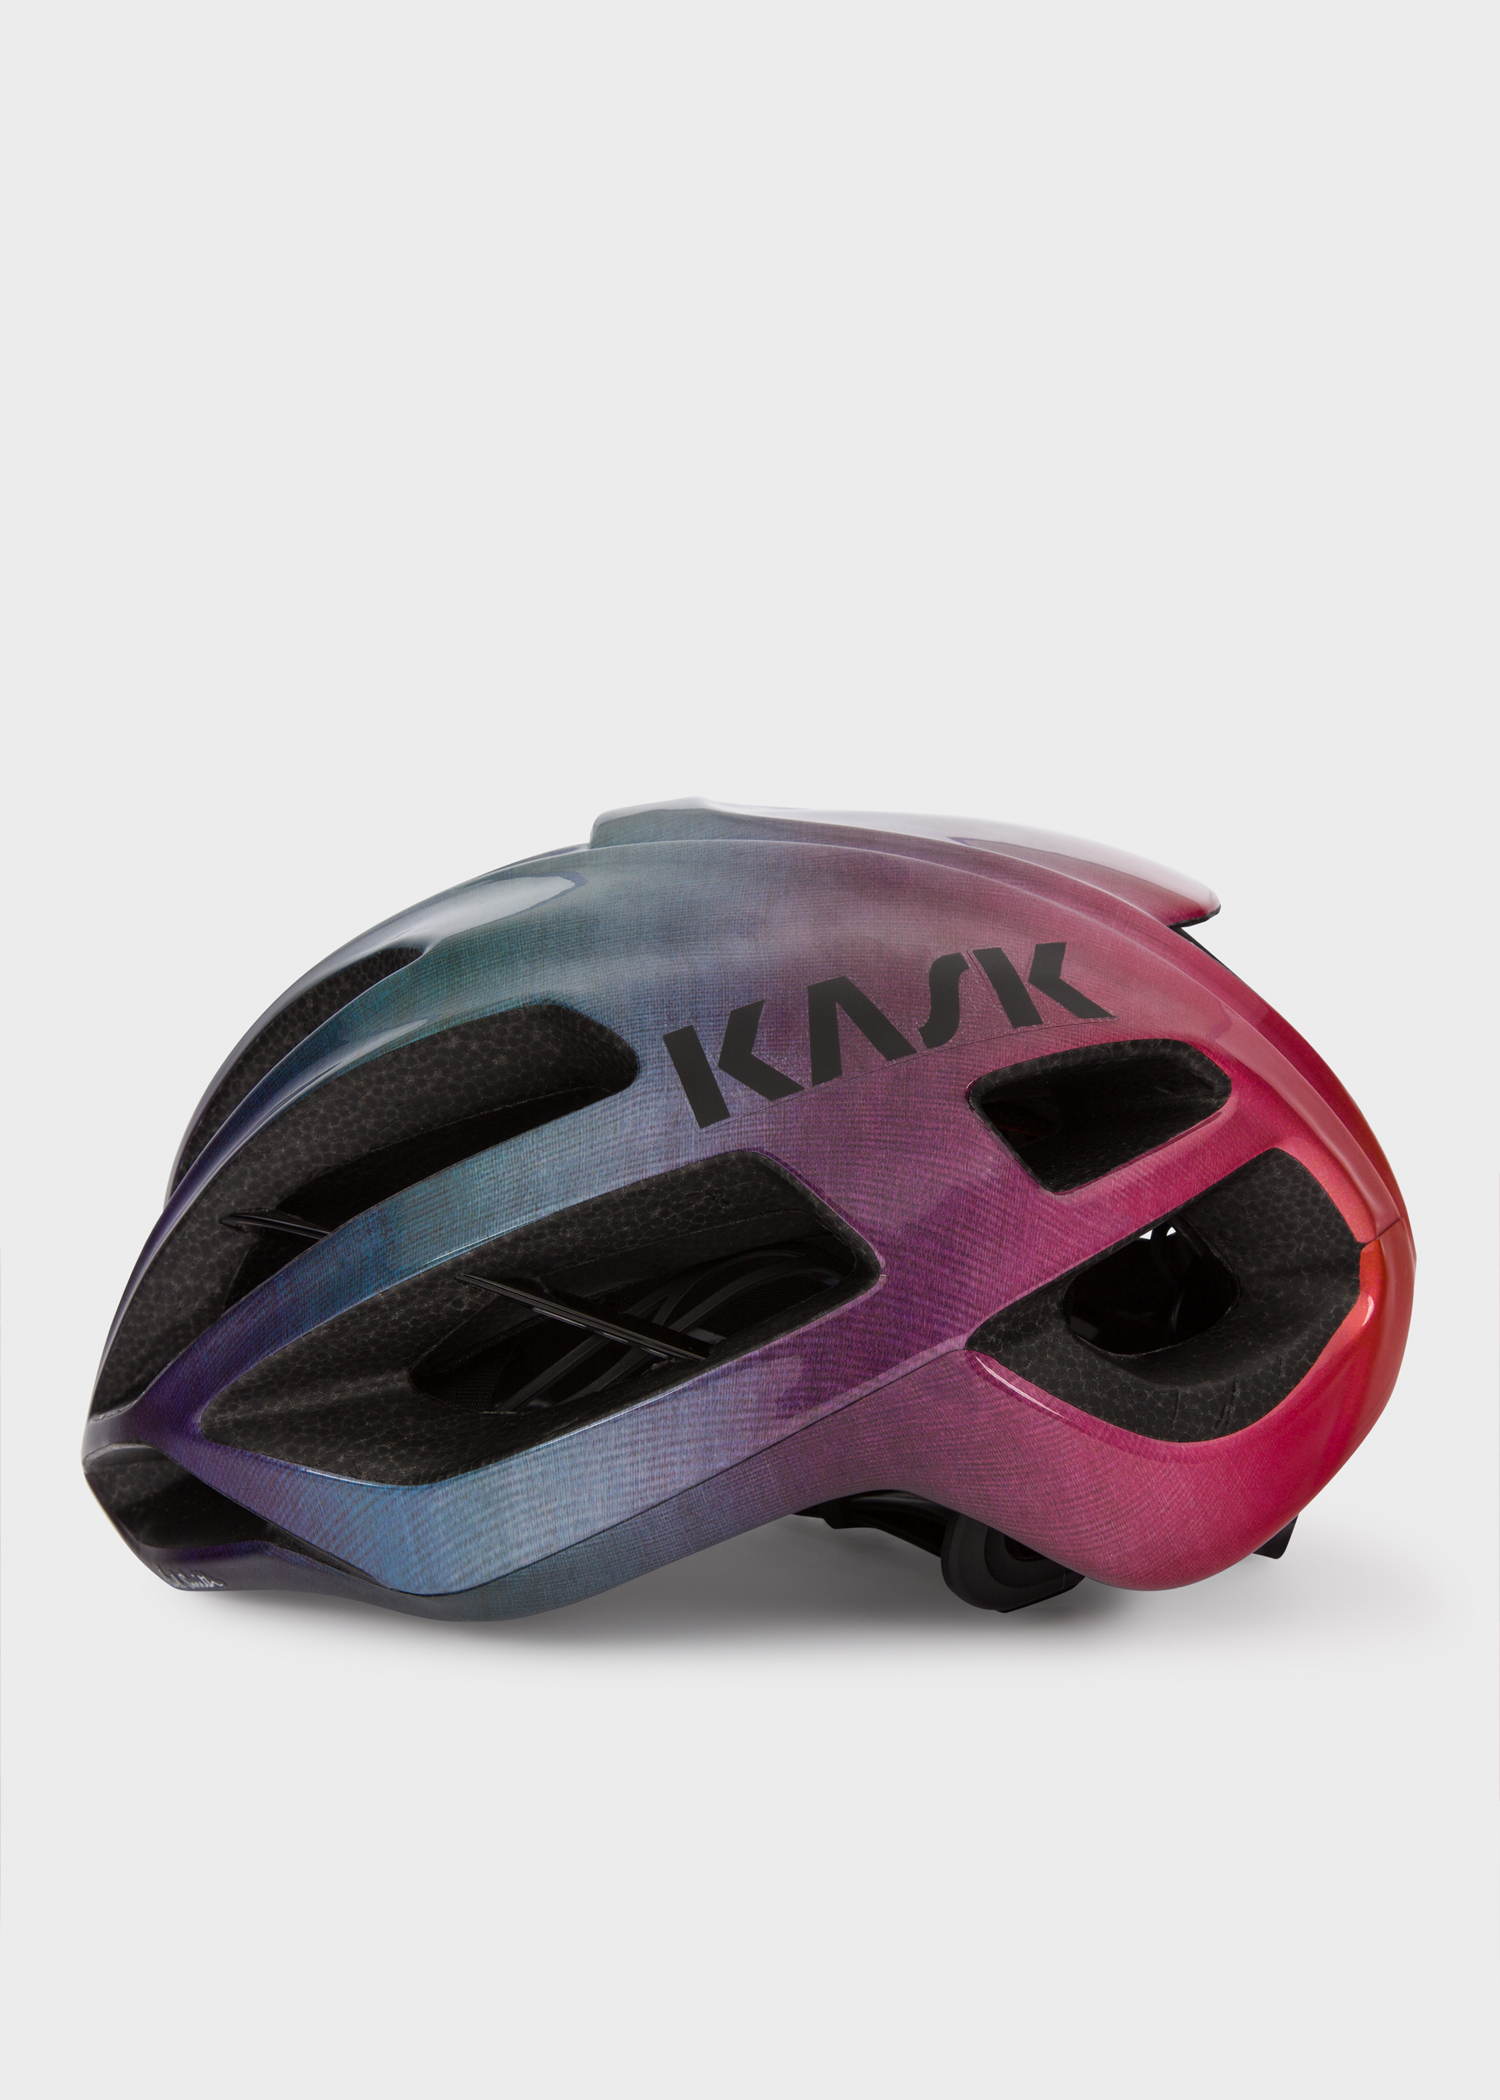 Paul Smith + KASK Protone Cycling Helmet-